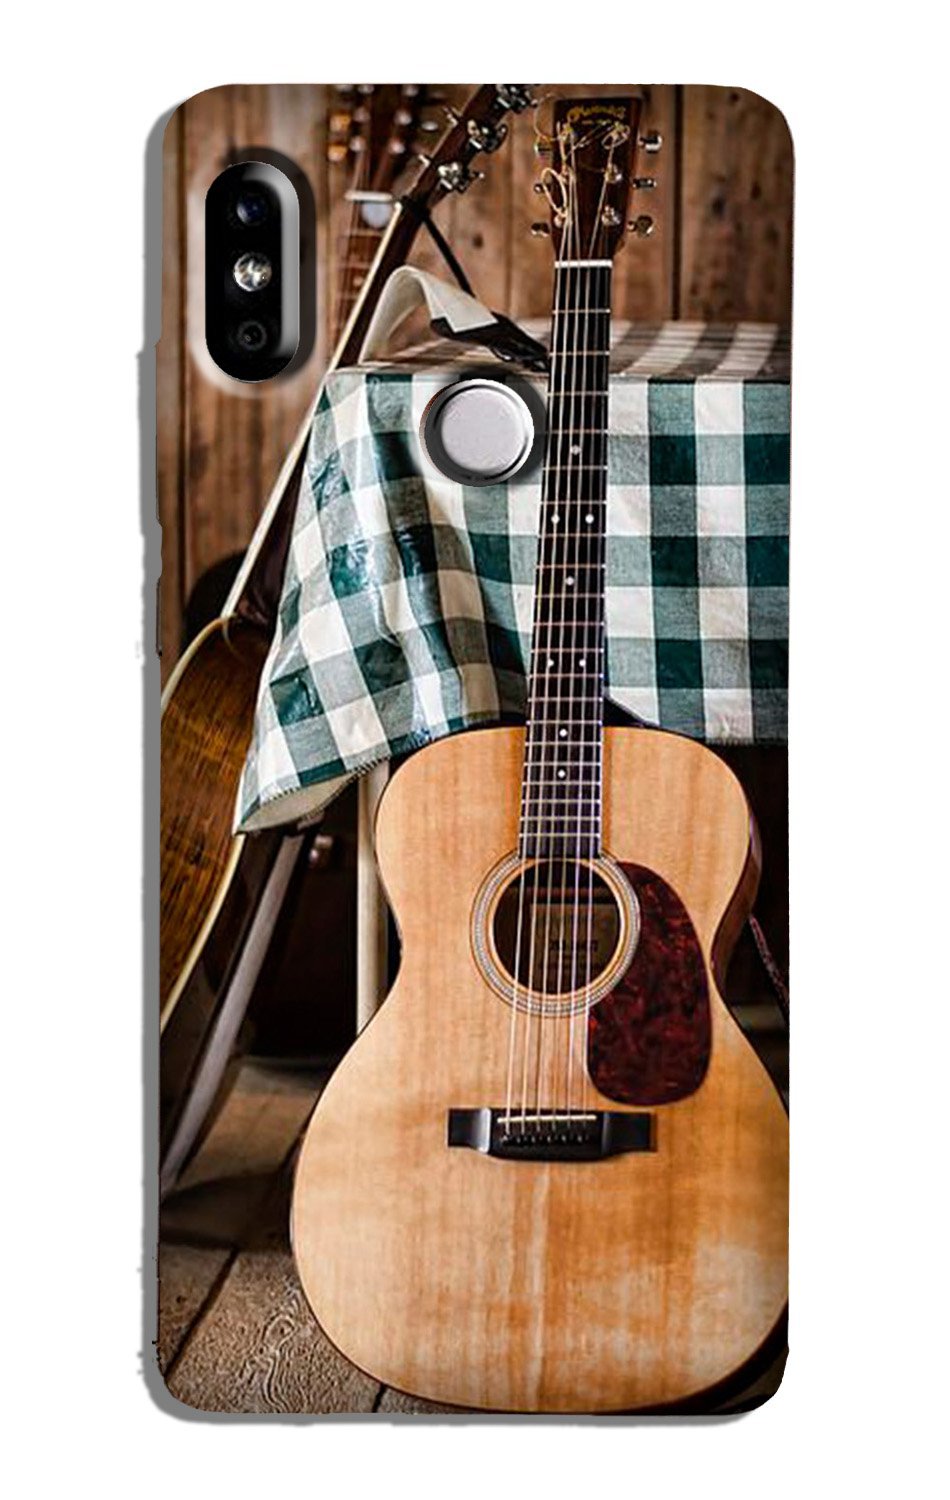 Guitar Case for Redmi Note 5 Pro